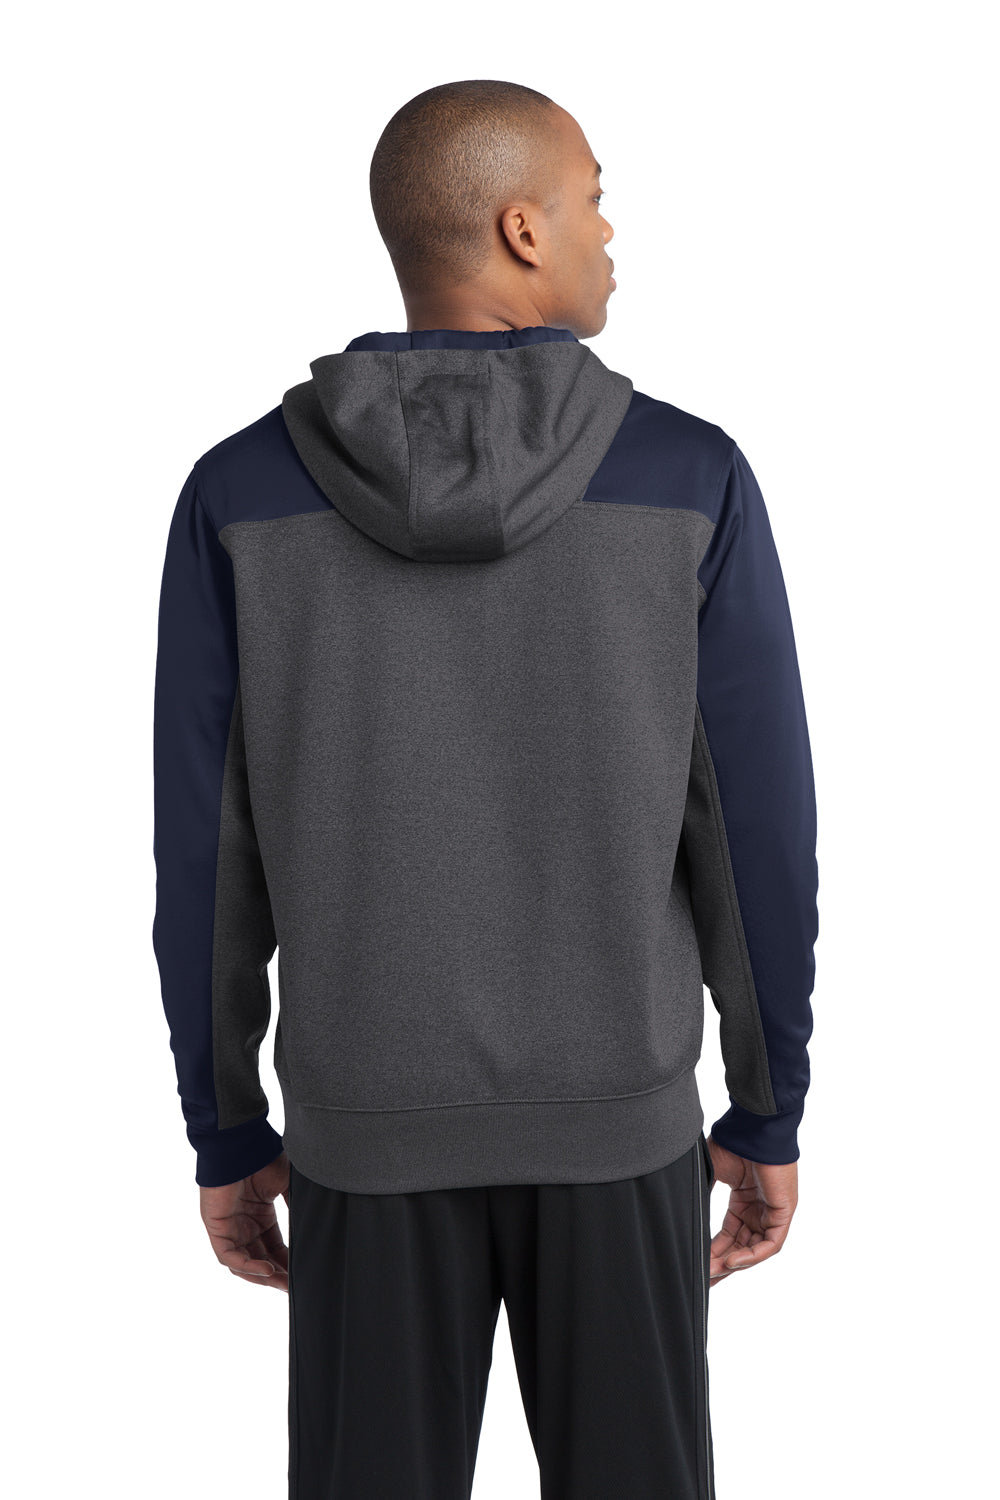 Sport-Tek ST249 Mens Tech Moisture Wicking Fleece 1/4 Zip Hooded Sweatshirt Hoodie Heather Graphite Grey/Navy Blue Back